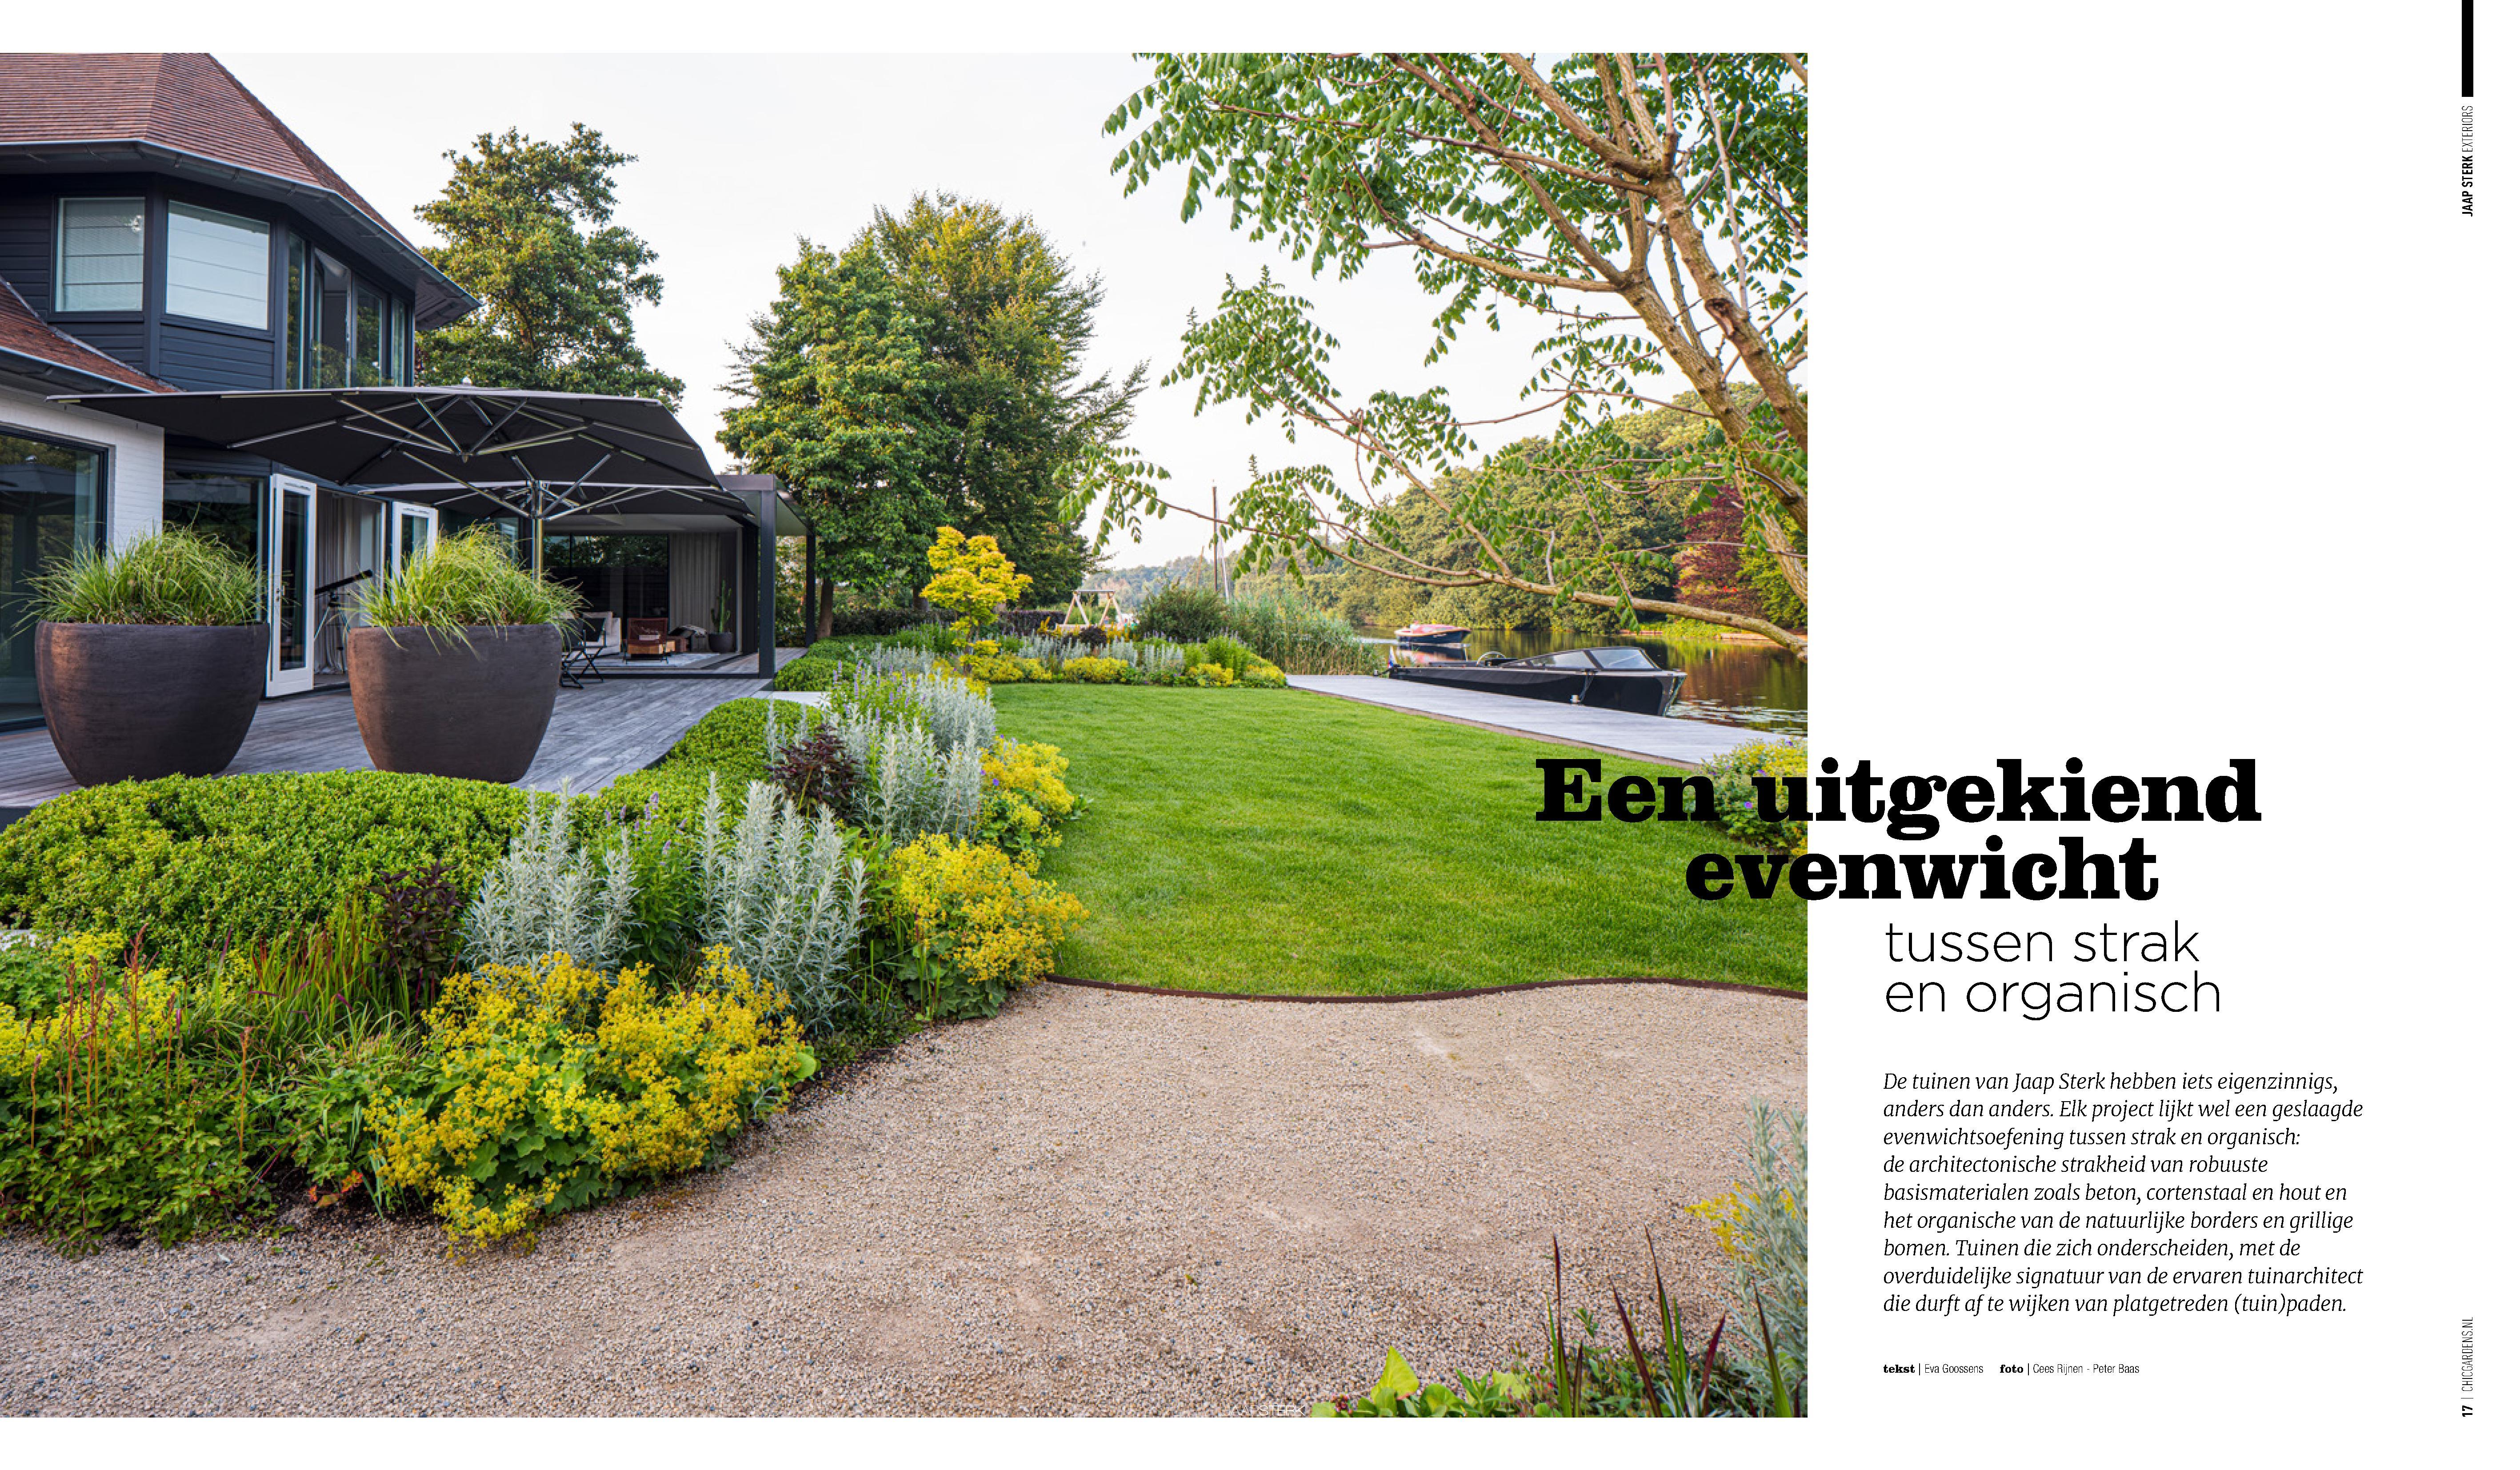 Chic Gardens Dutch edition 2020